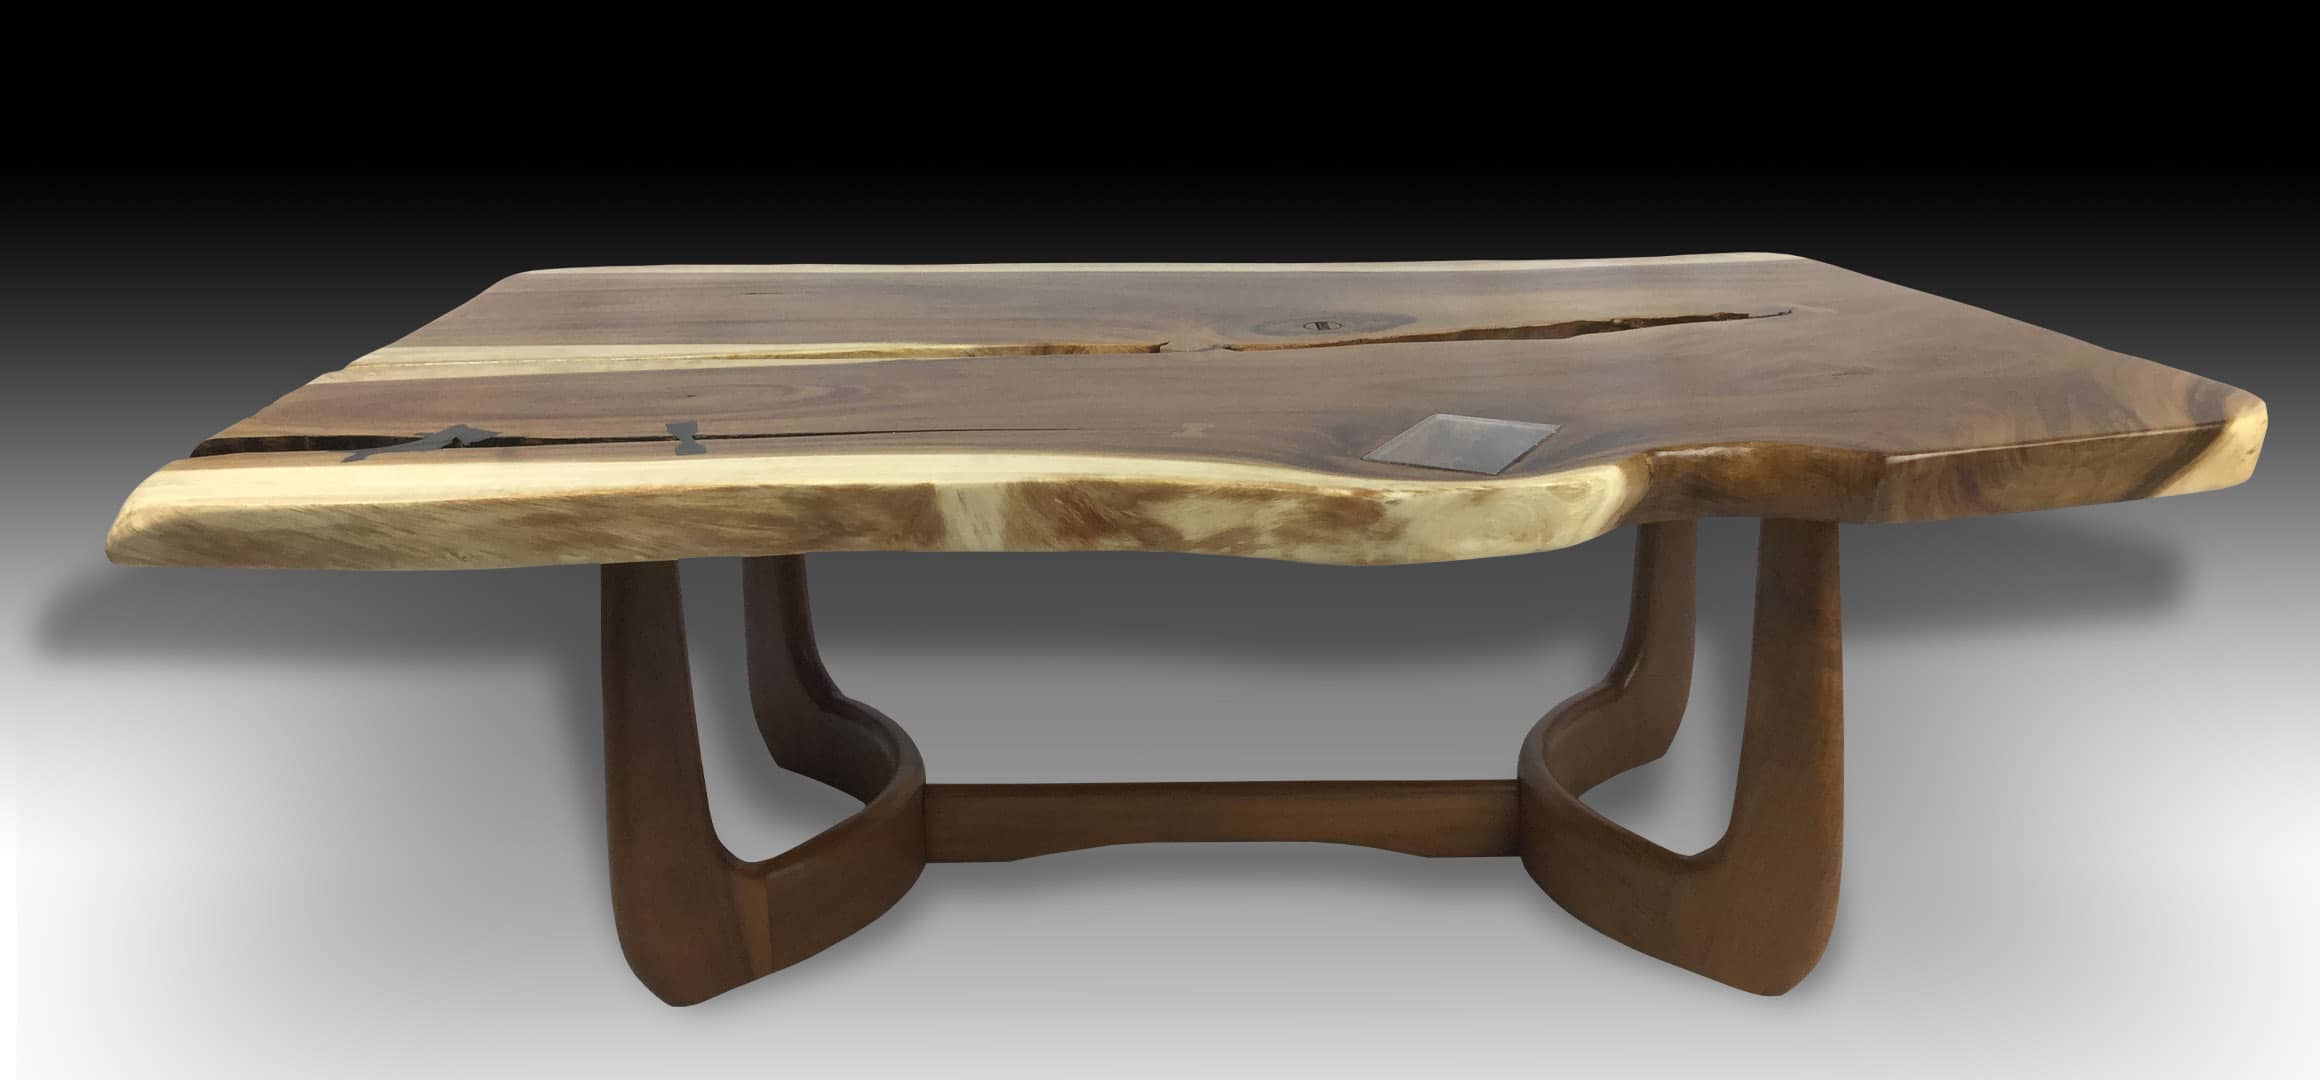 Canyon live edge Suar wood coffee table with Teak wood base